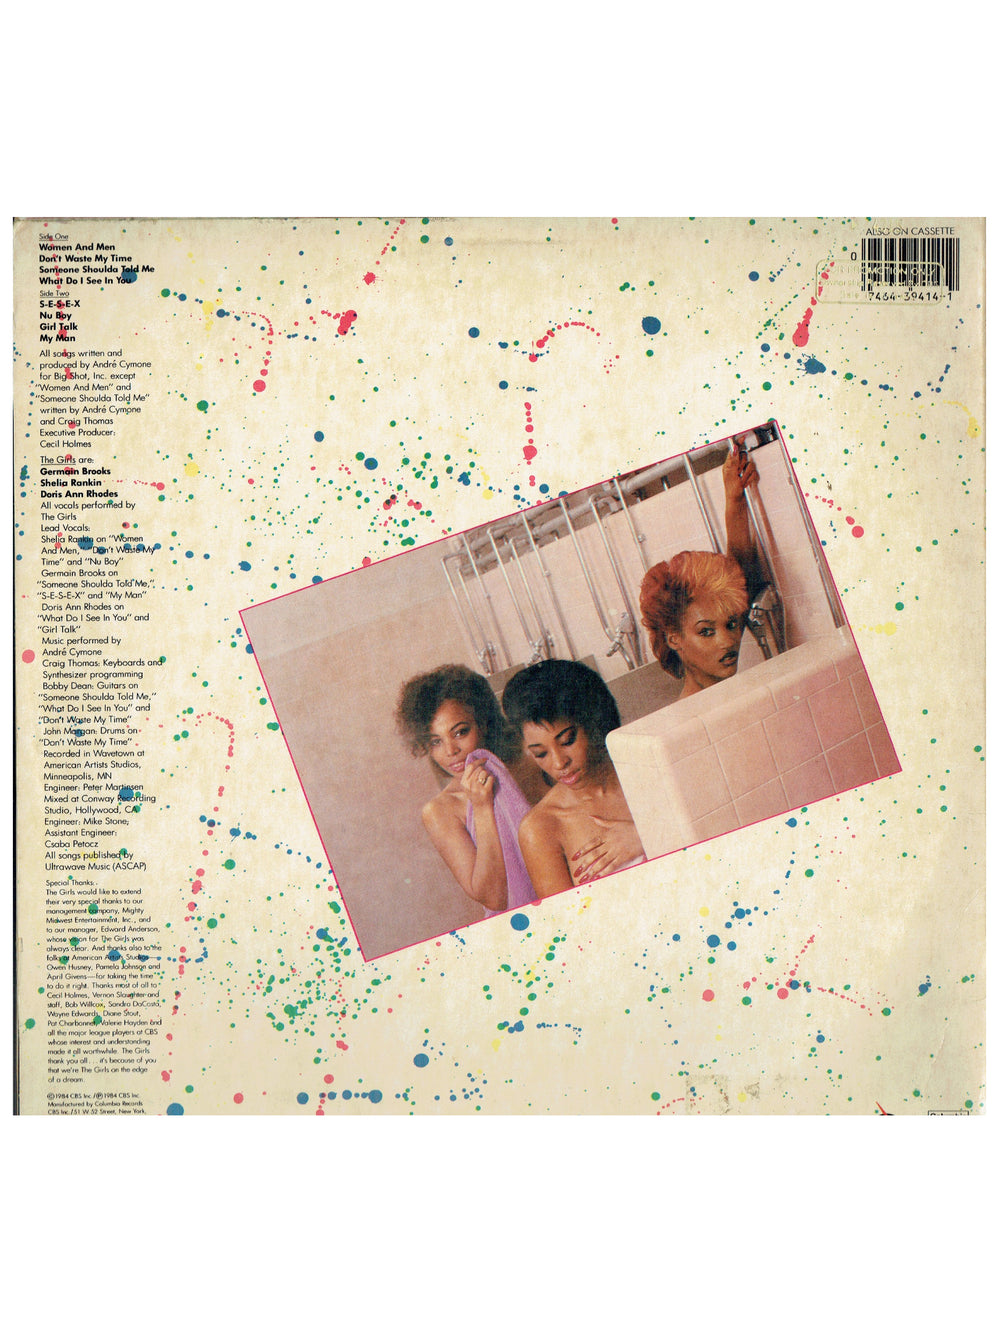 Prince – The Girls Girl Talk Andre Cymone USA 1984 Vinyl Album Prince